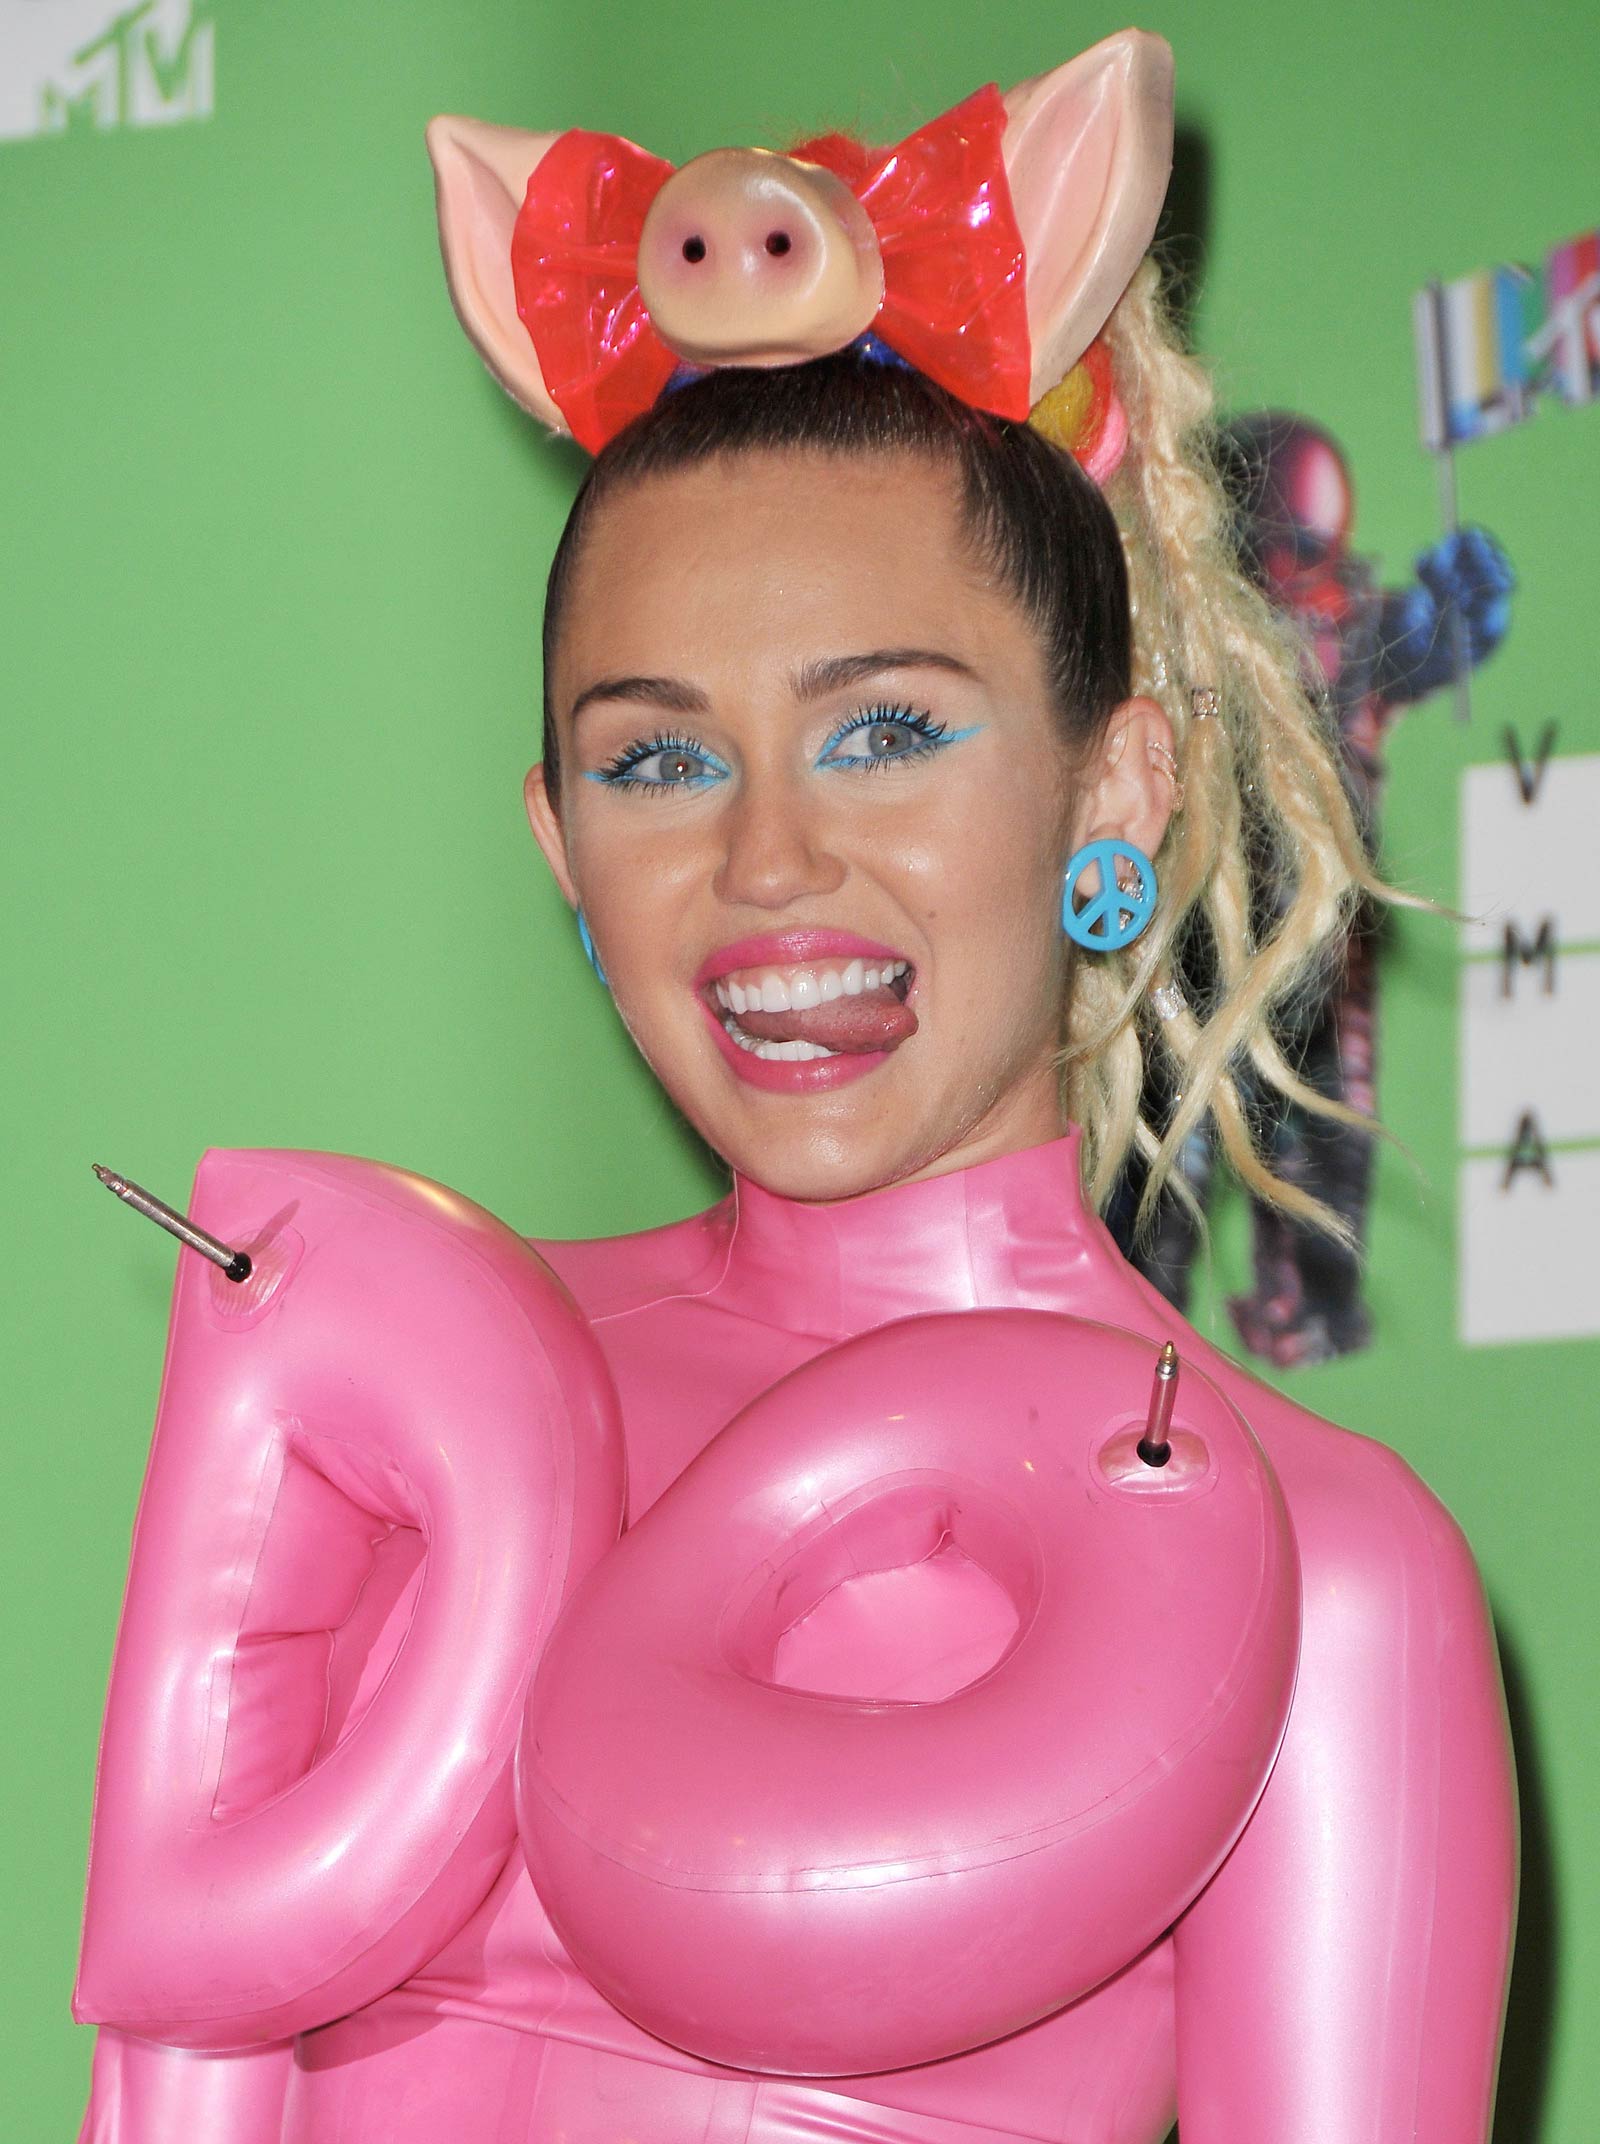 Miley Cyrus at the 2015 MTV Video Music Awards